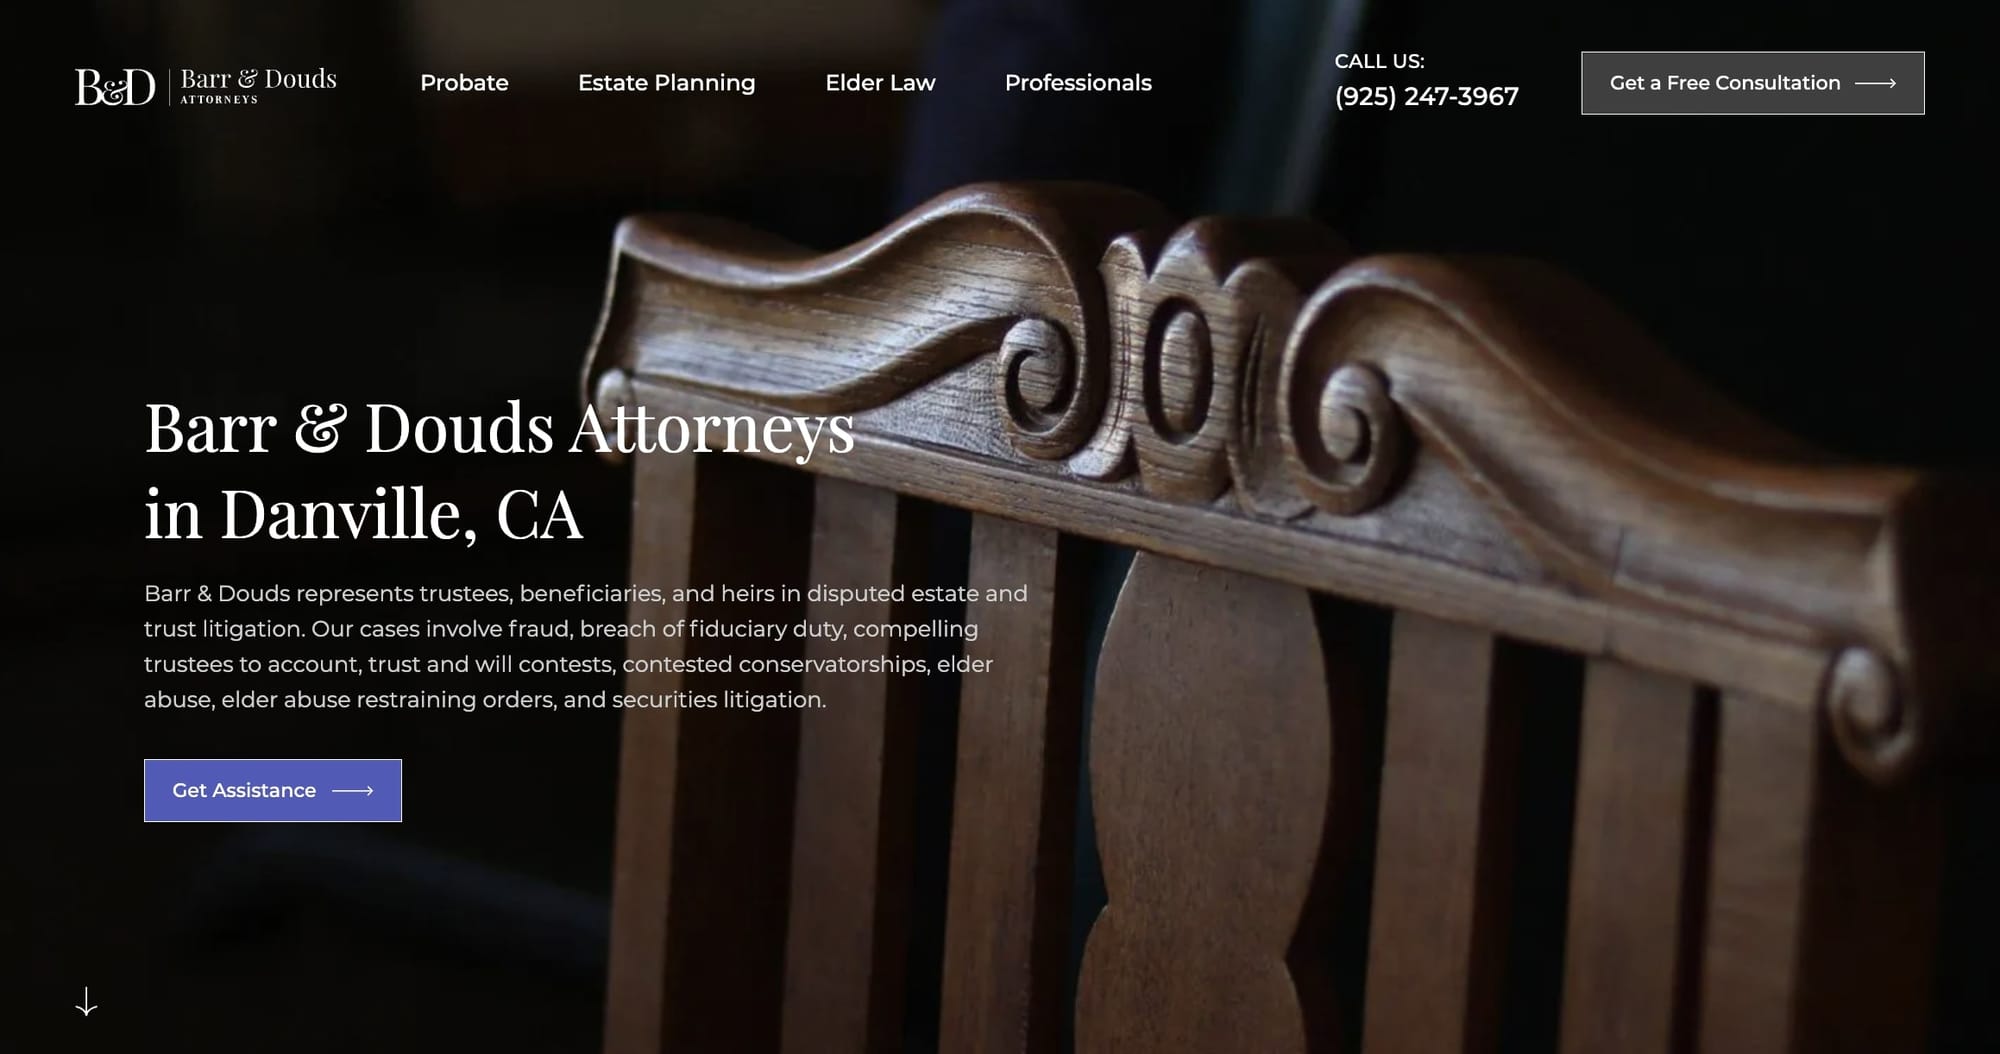 Barr & Douds Attorneys website